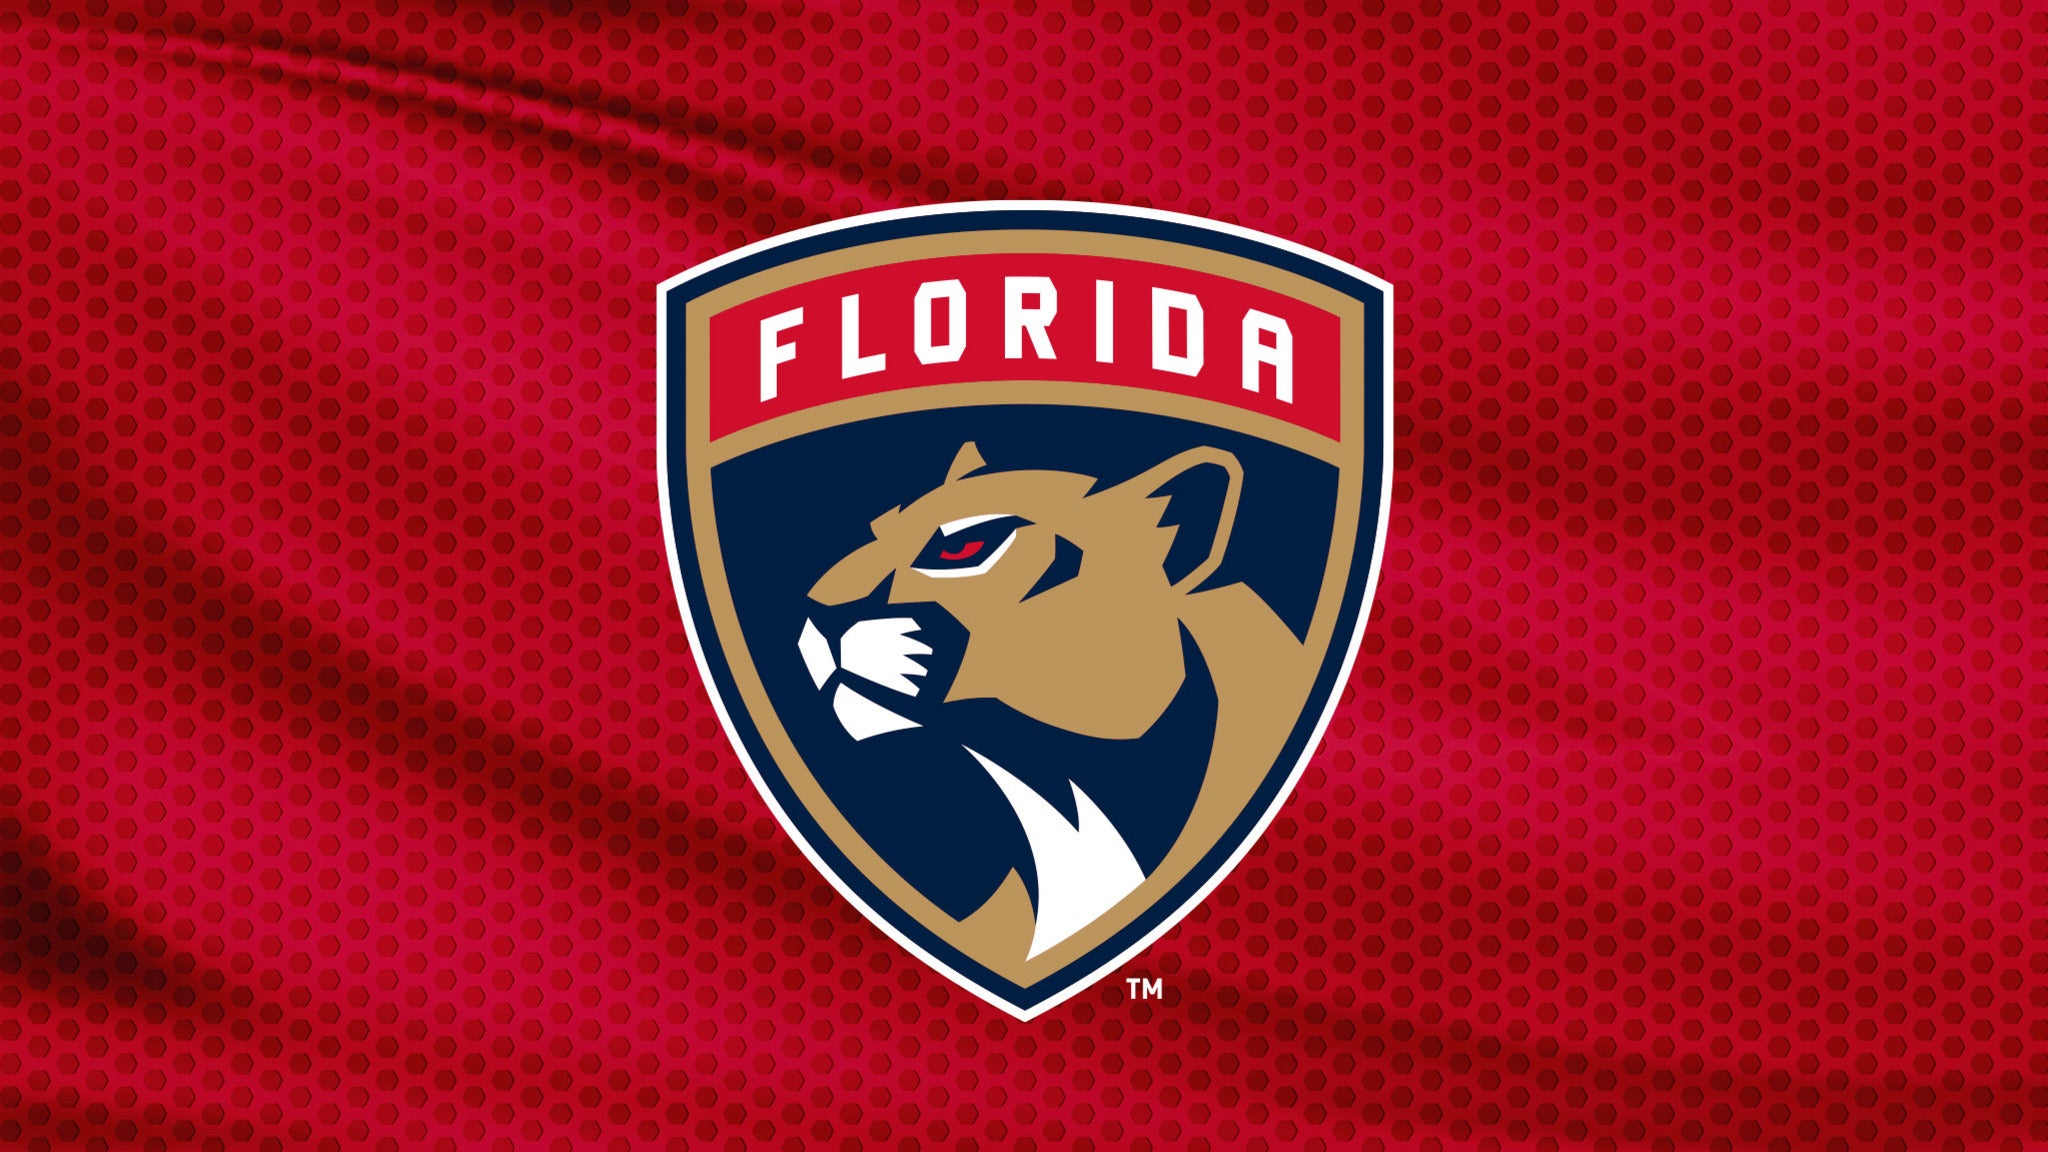 Florida Panthers vs. Arizona Coyotes at FLA Live Arena - Sunrise, FL 33323